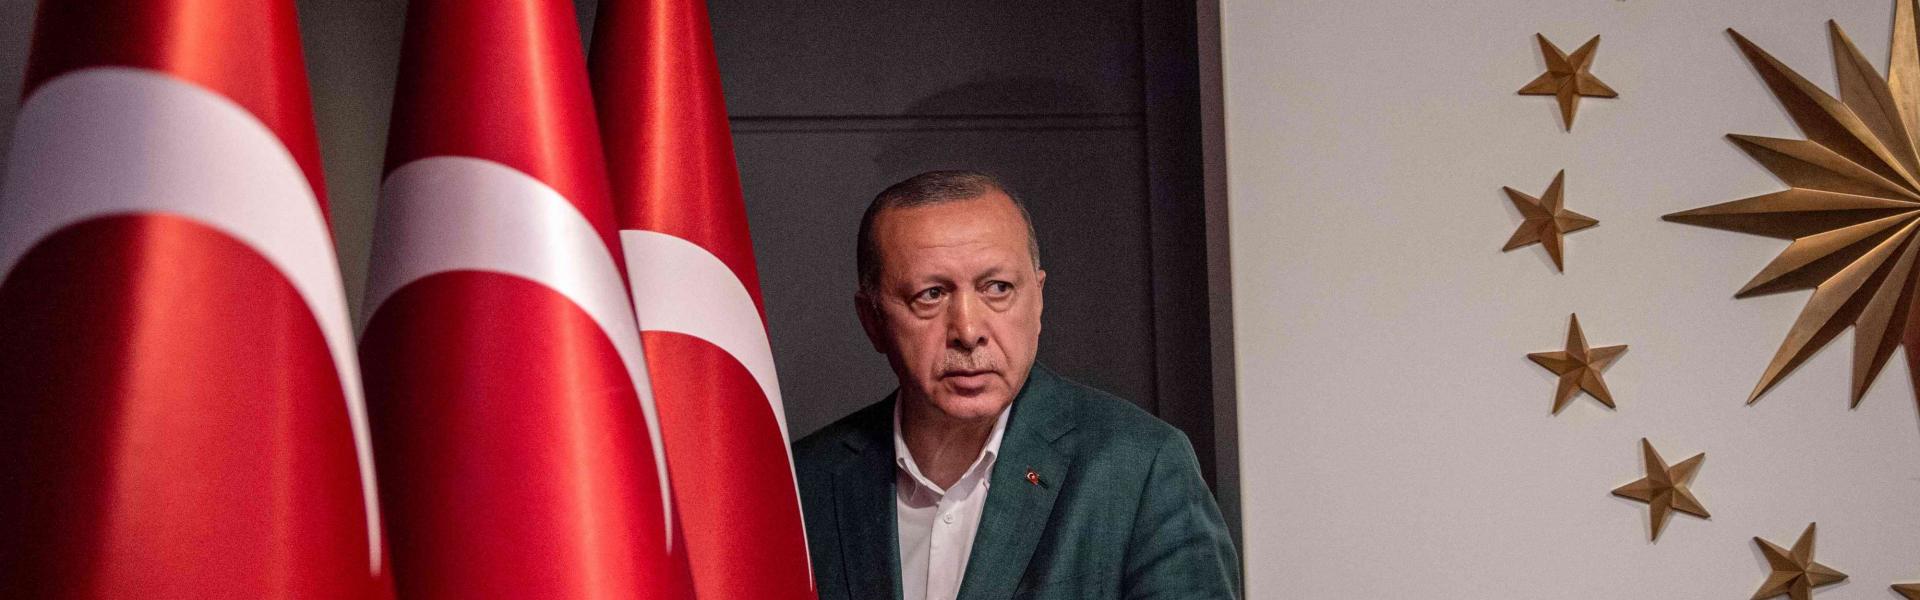 Erdogan Crossed a Line on Turkey’s Democracy: Balance of Power 2